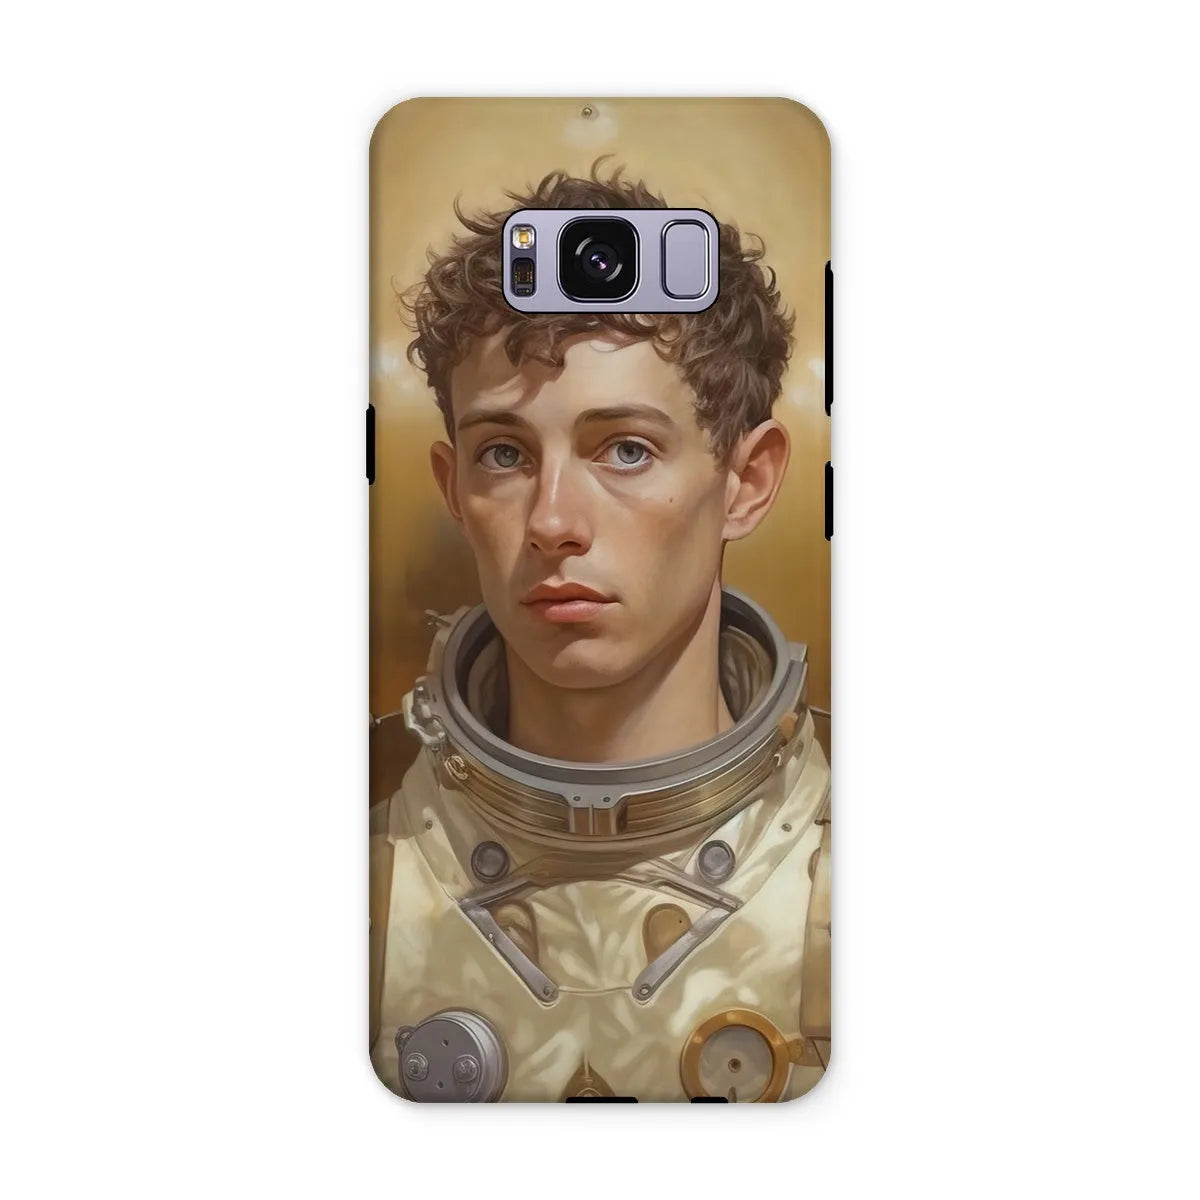 Noah The Gay Astronaut - Lgbtq Art Phone Case - Samsung Galaxy S8 Plus / Matte - Mobile Phone Cases - Aesthetic Art